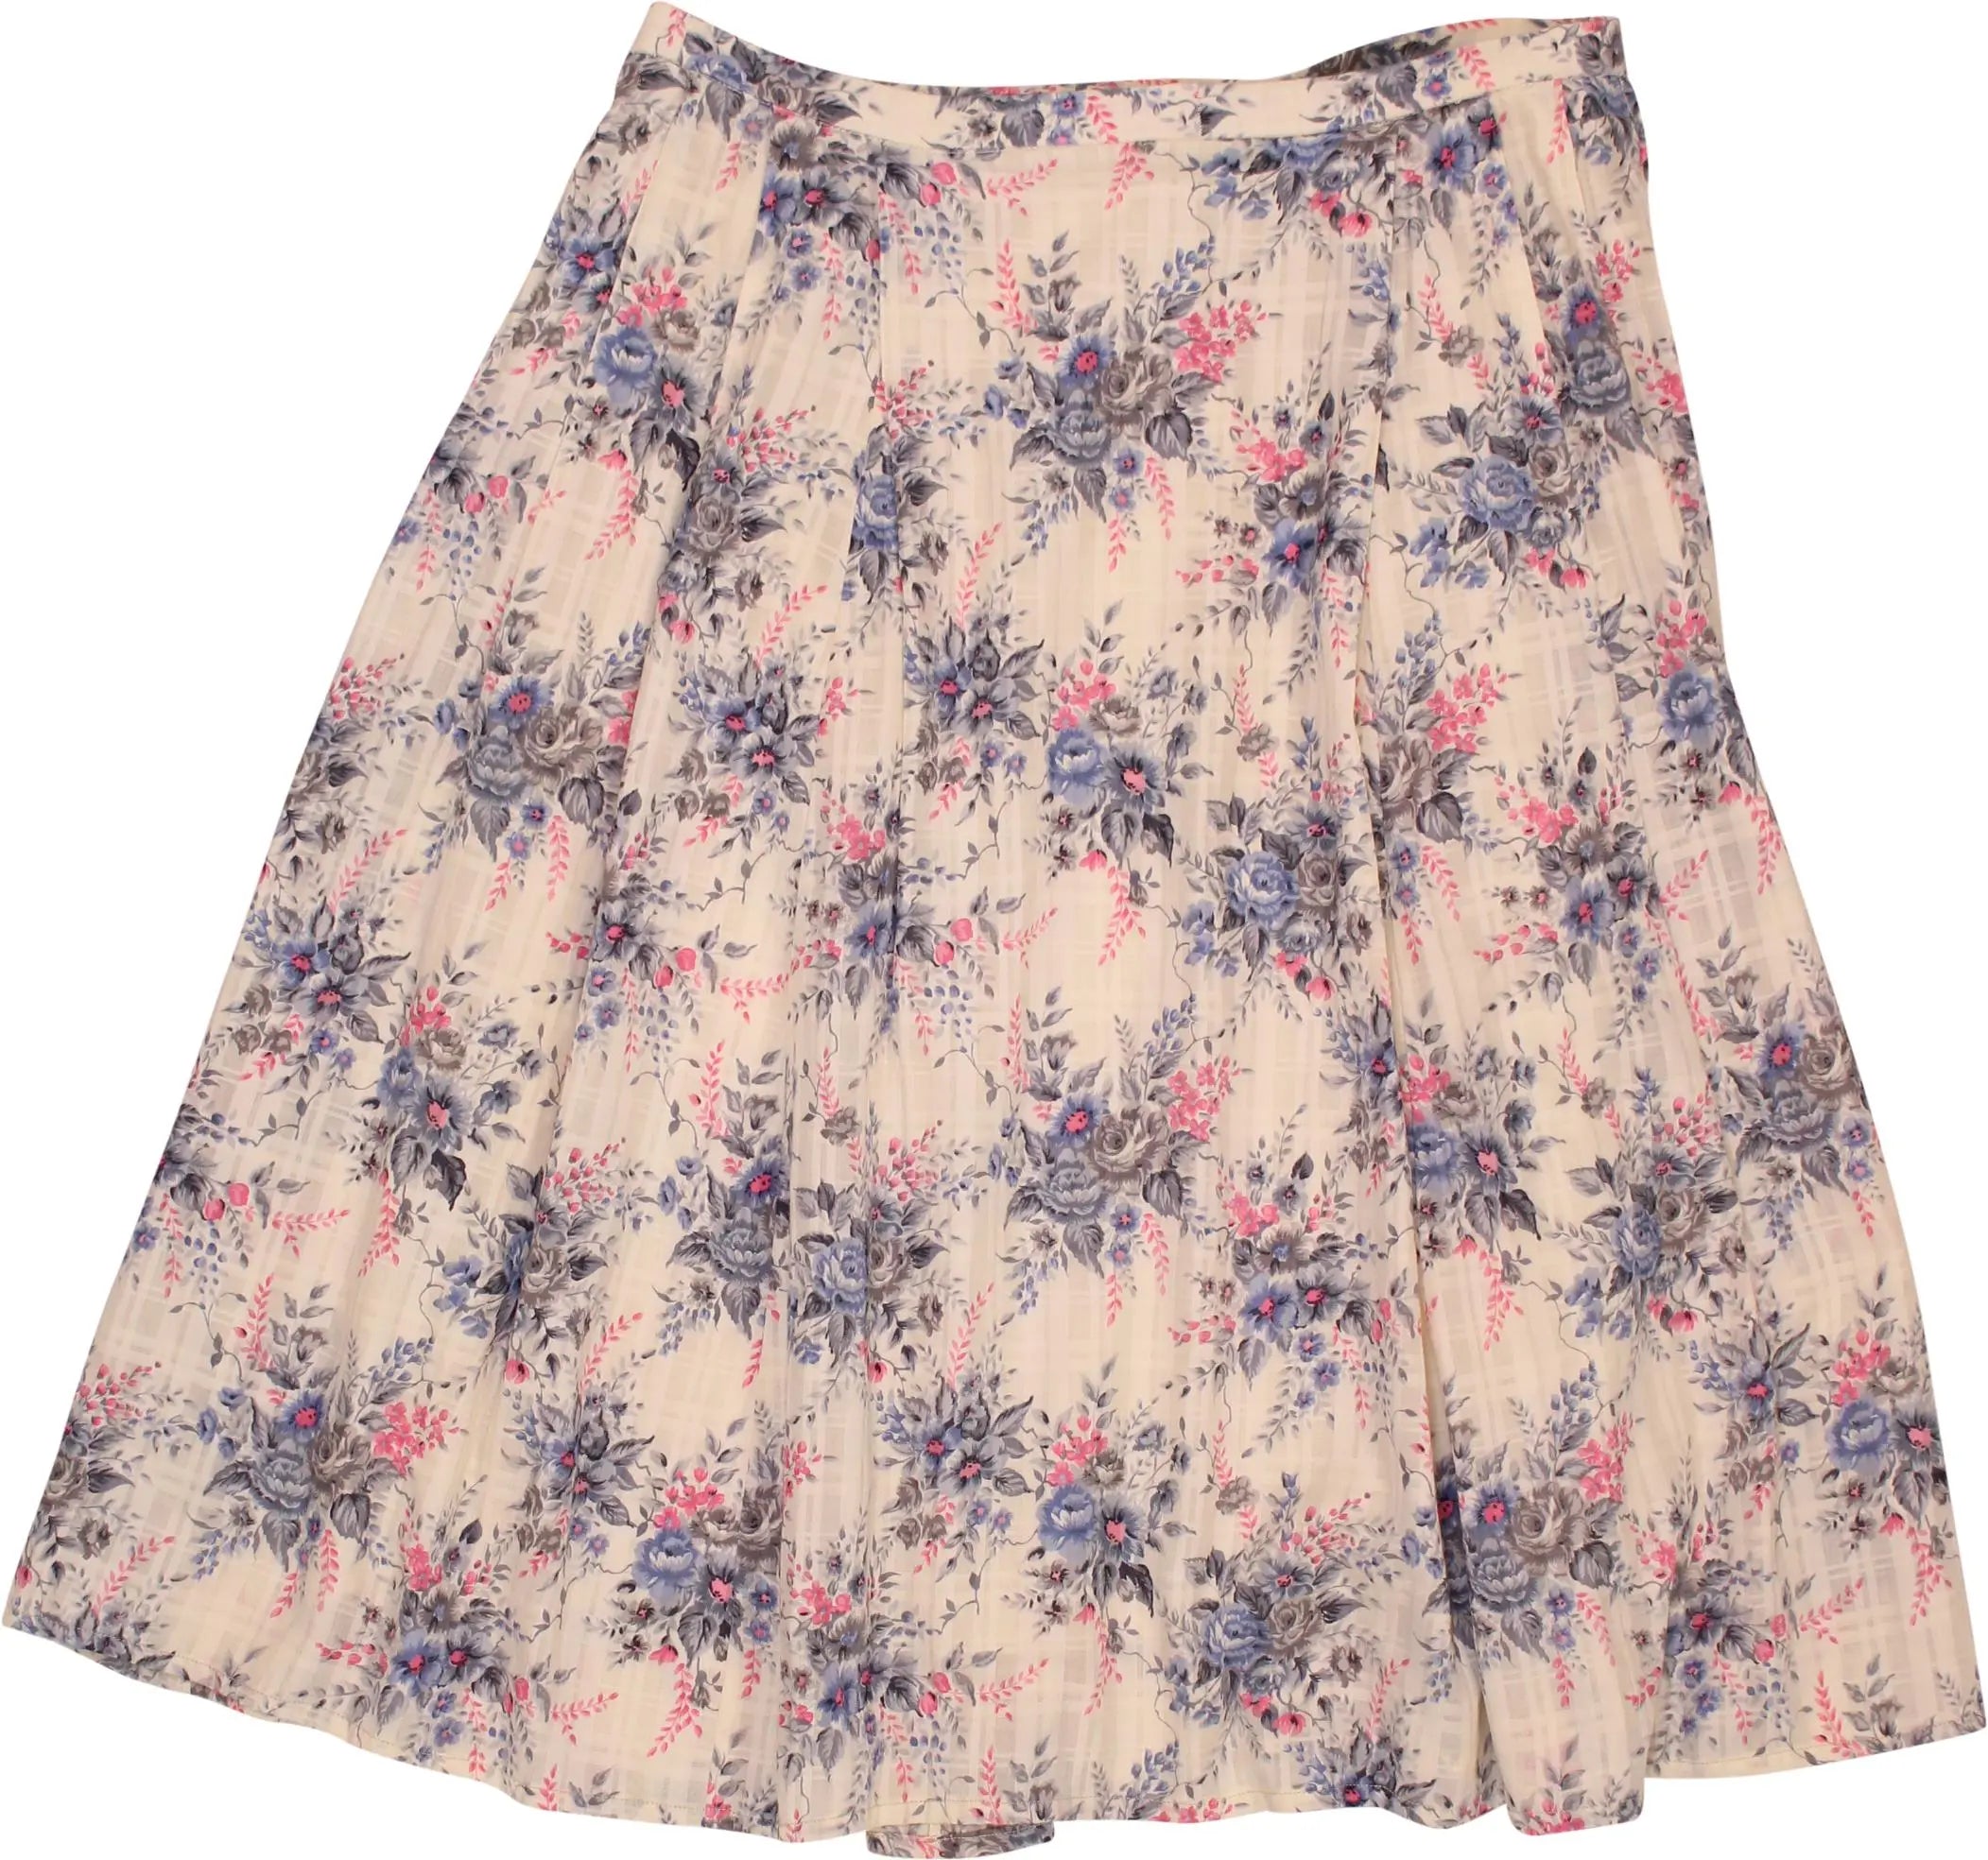 Handmade - Handmade Pleated Skirt- ThriftTale.com - Vintage and second handclothing